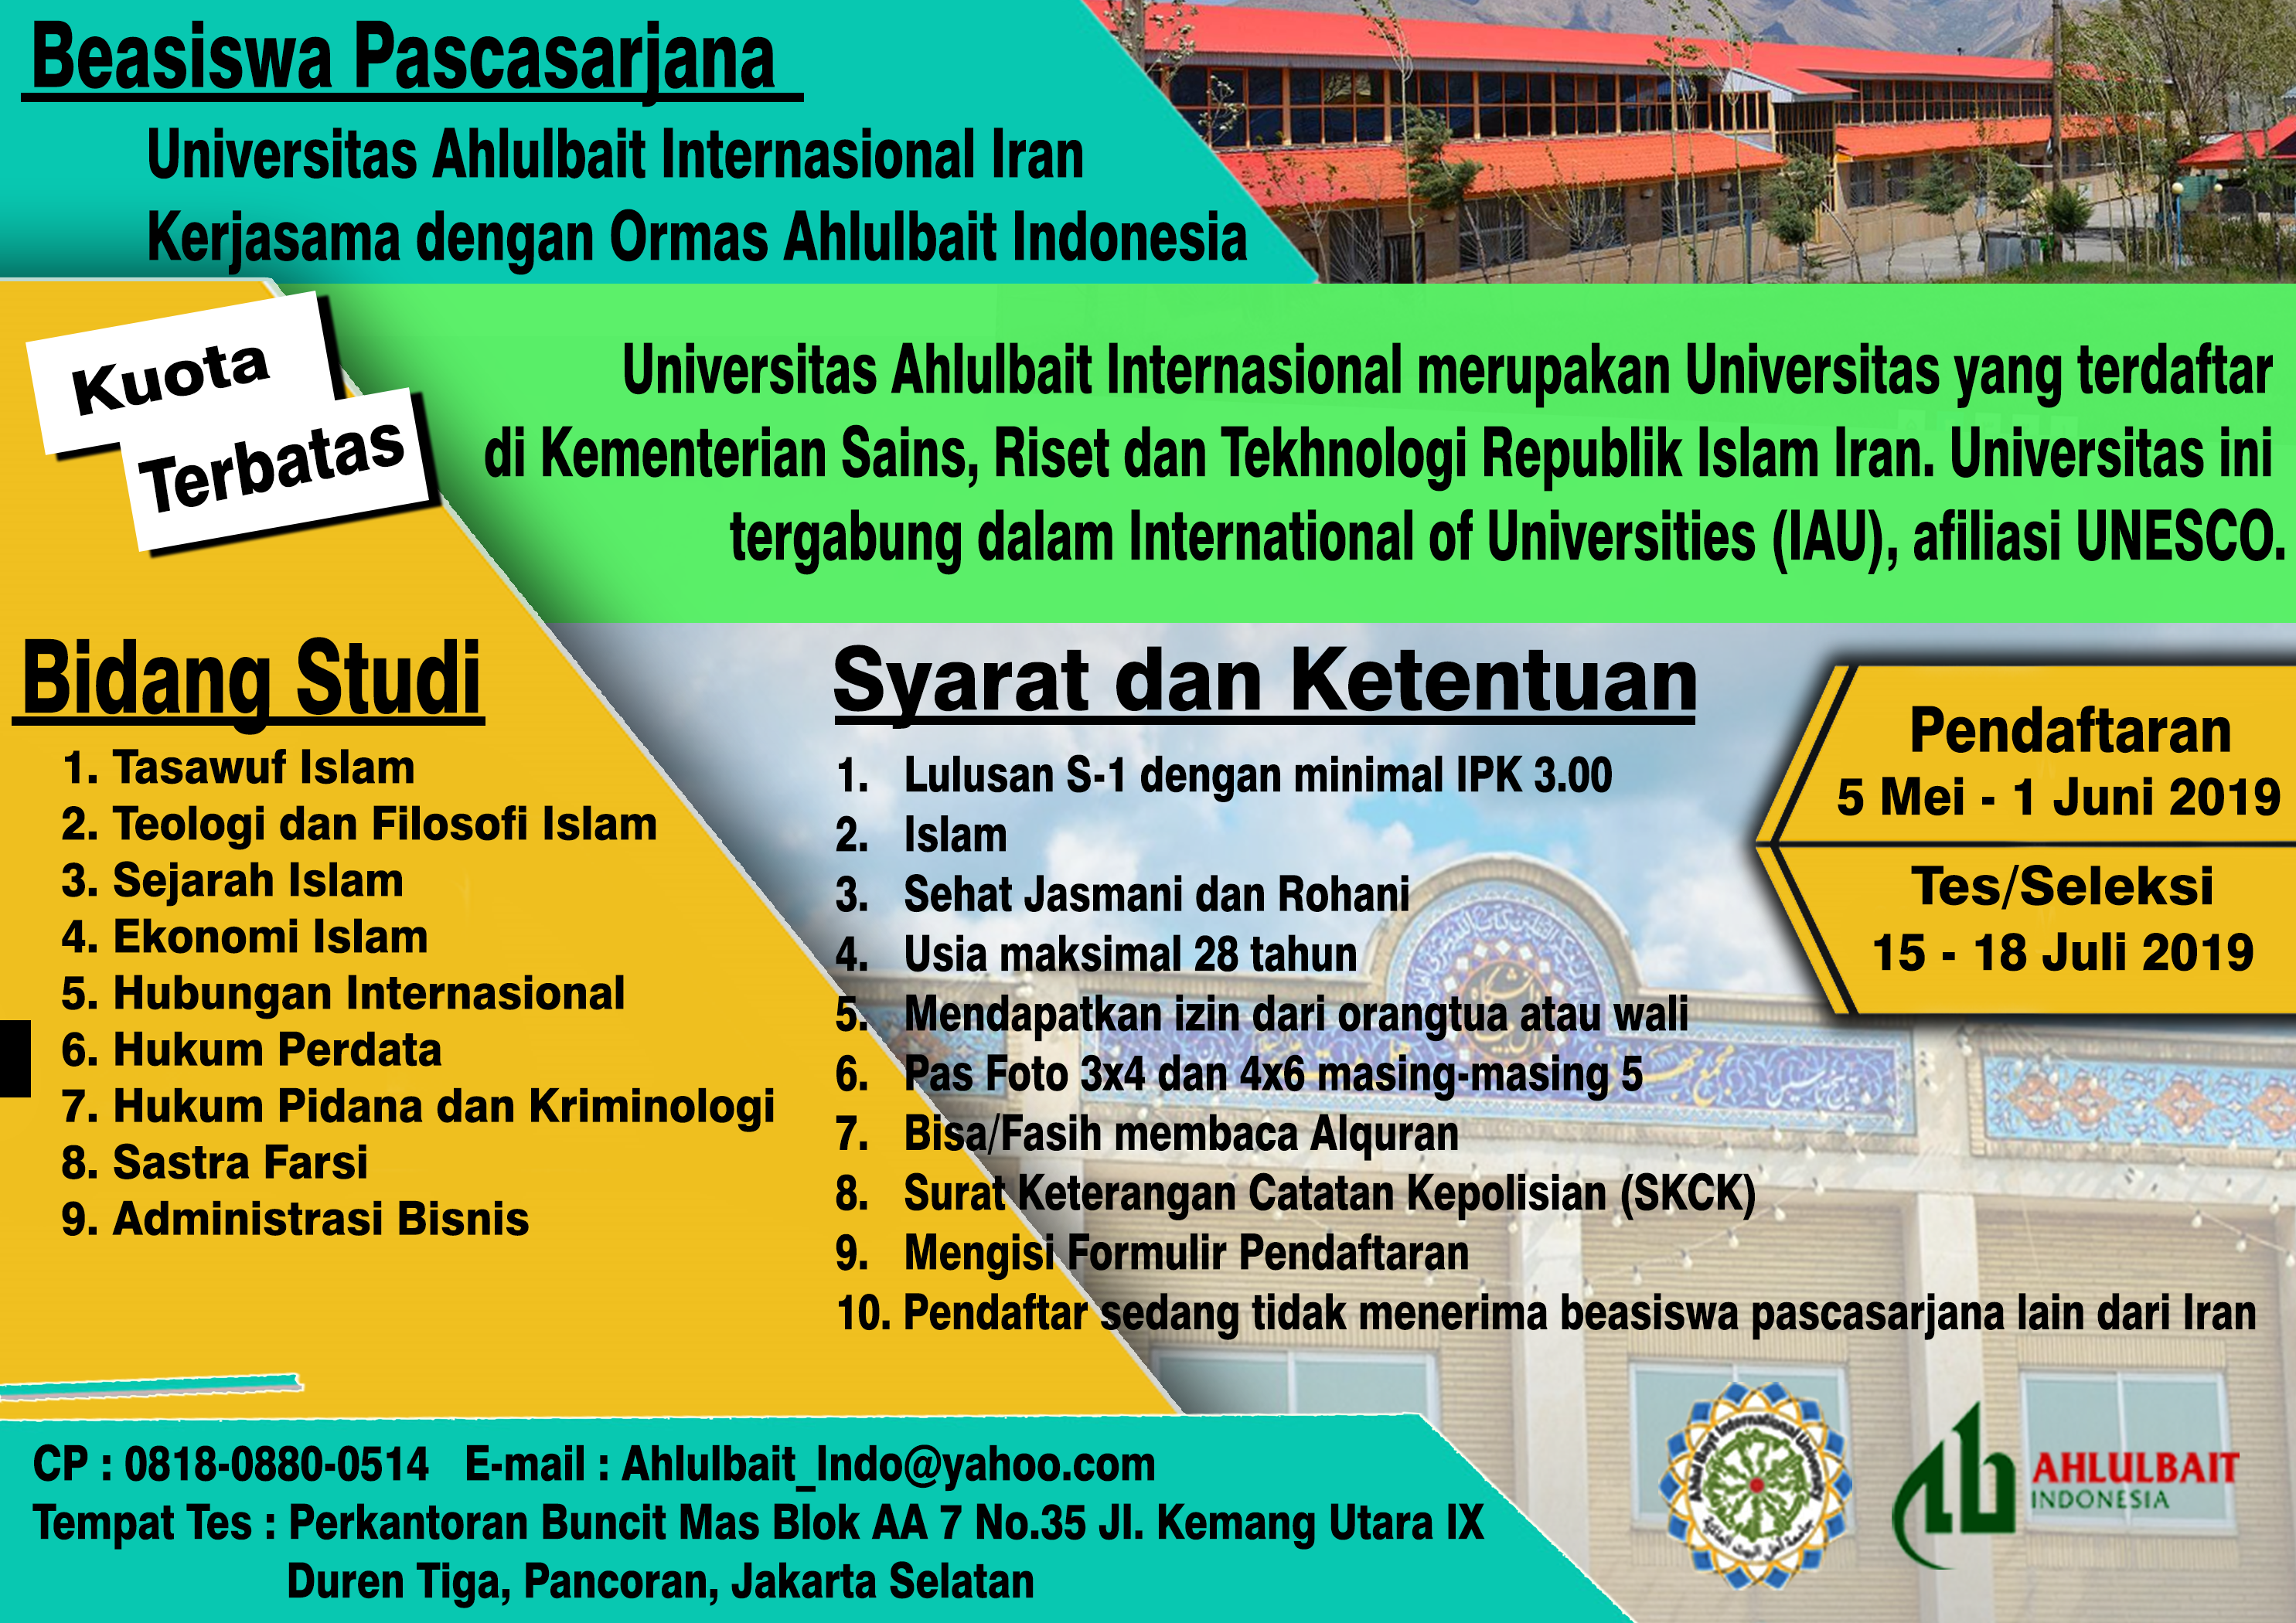 Beasiswa Untuk Kuliah Pascasarjana (S2) Di Universitas Ahlulbait Internasional , Iran – Ahlulbait Indonesia